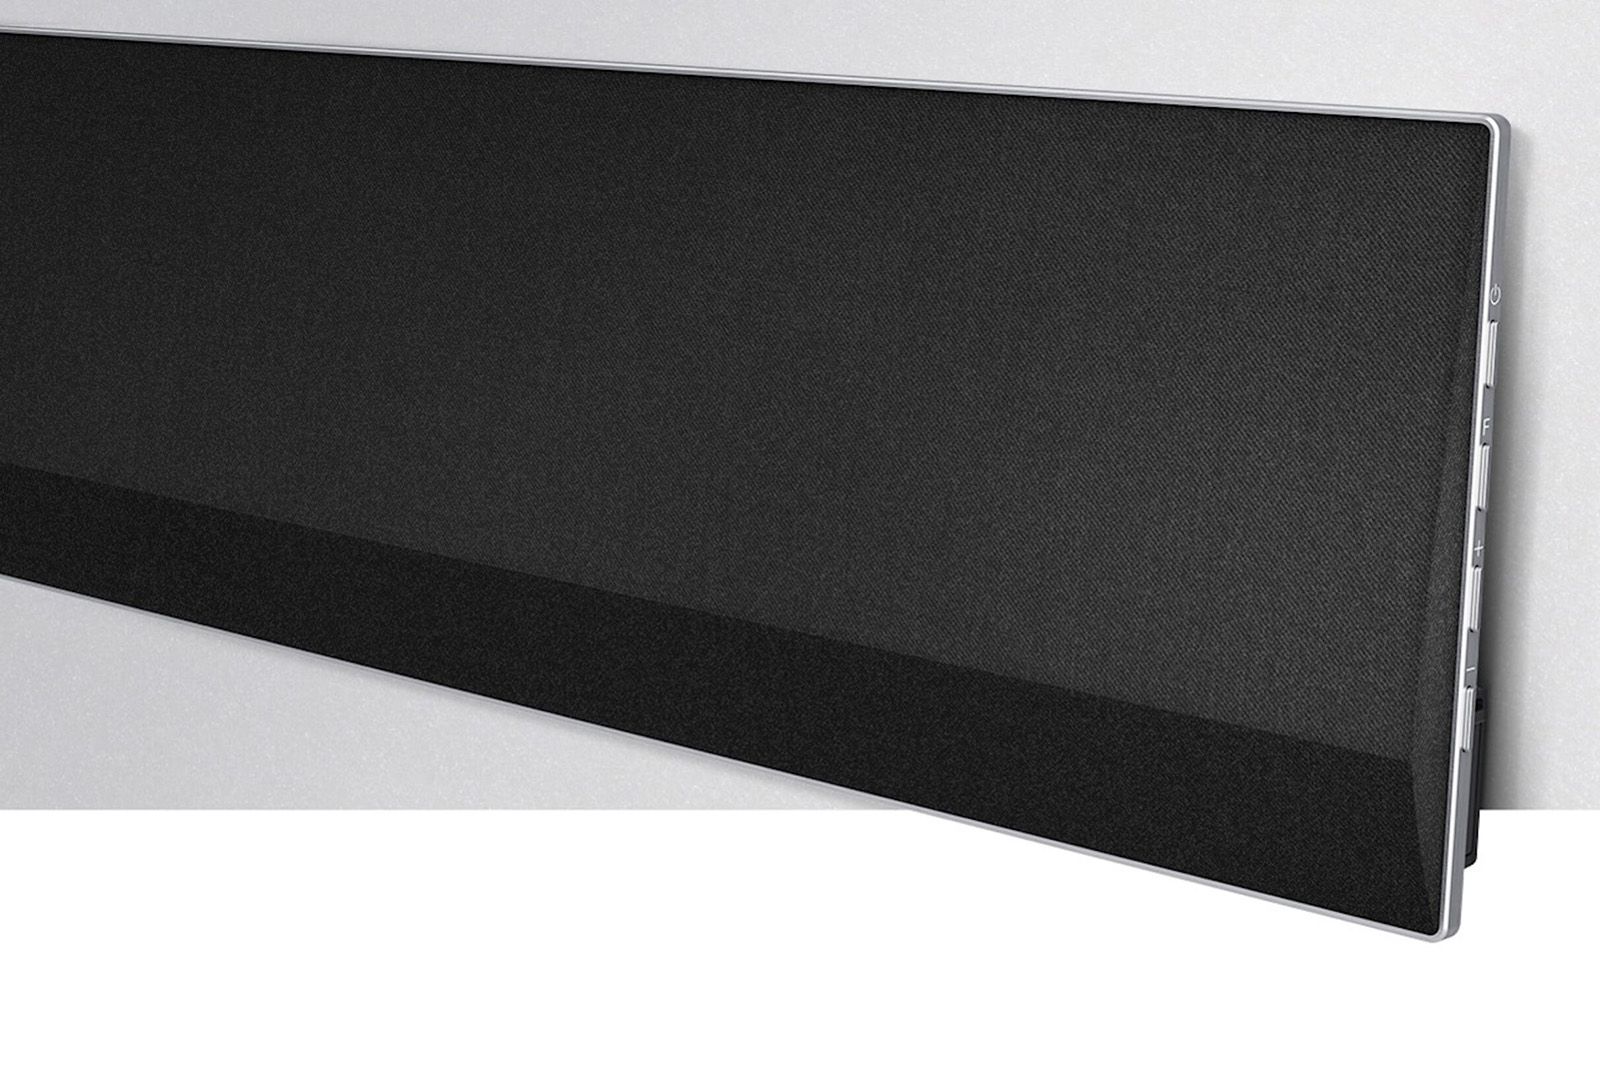 LG GX soundbar sits flush to wall to match Gallery OLED TVs photo 2